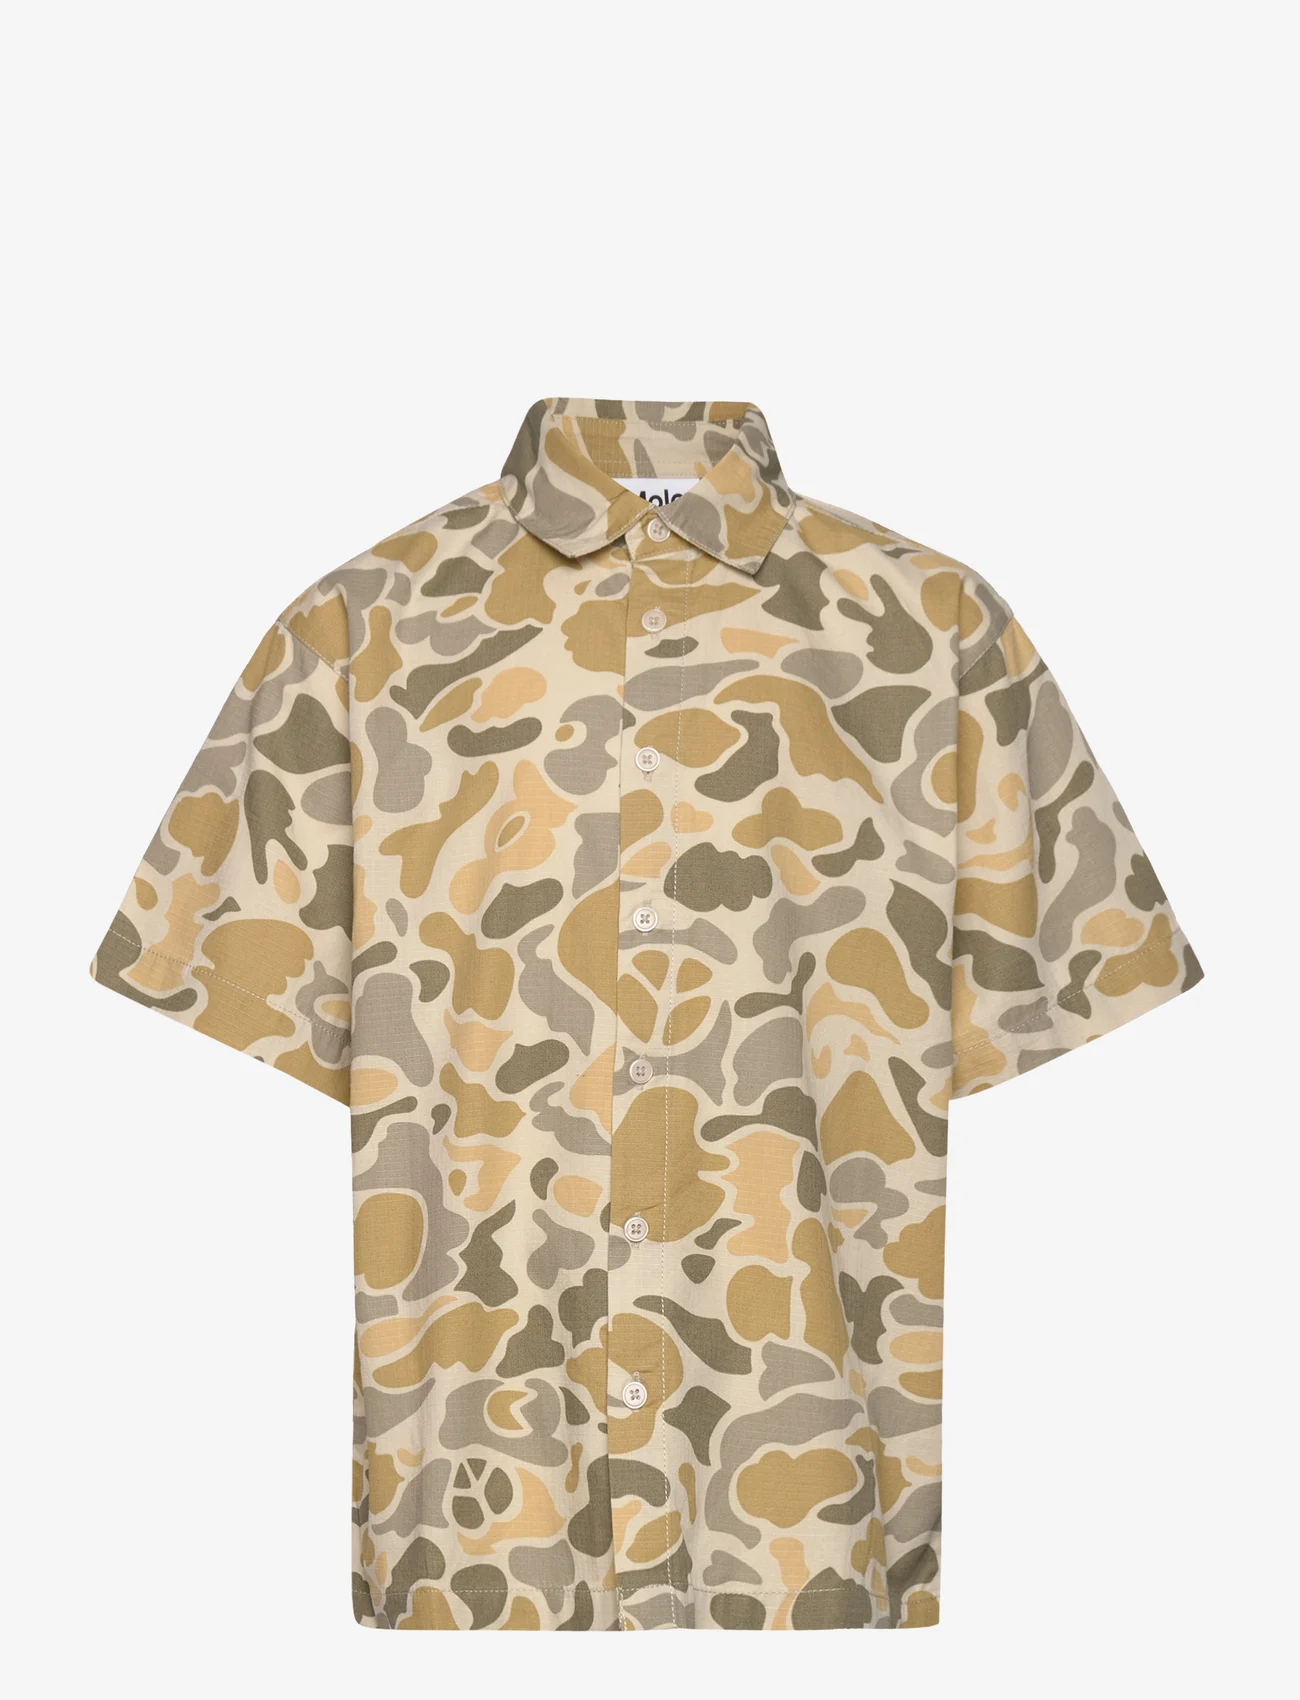 Molo - Rio - overhemden met korte mouwen - sandy shapes - 0